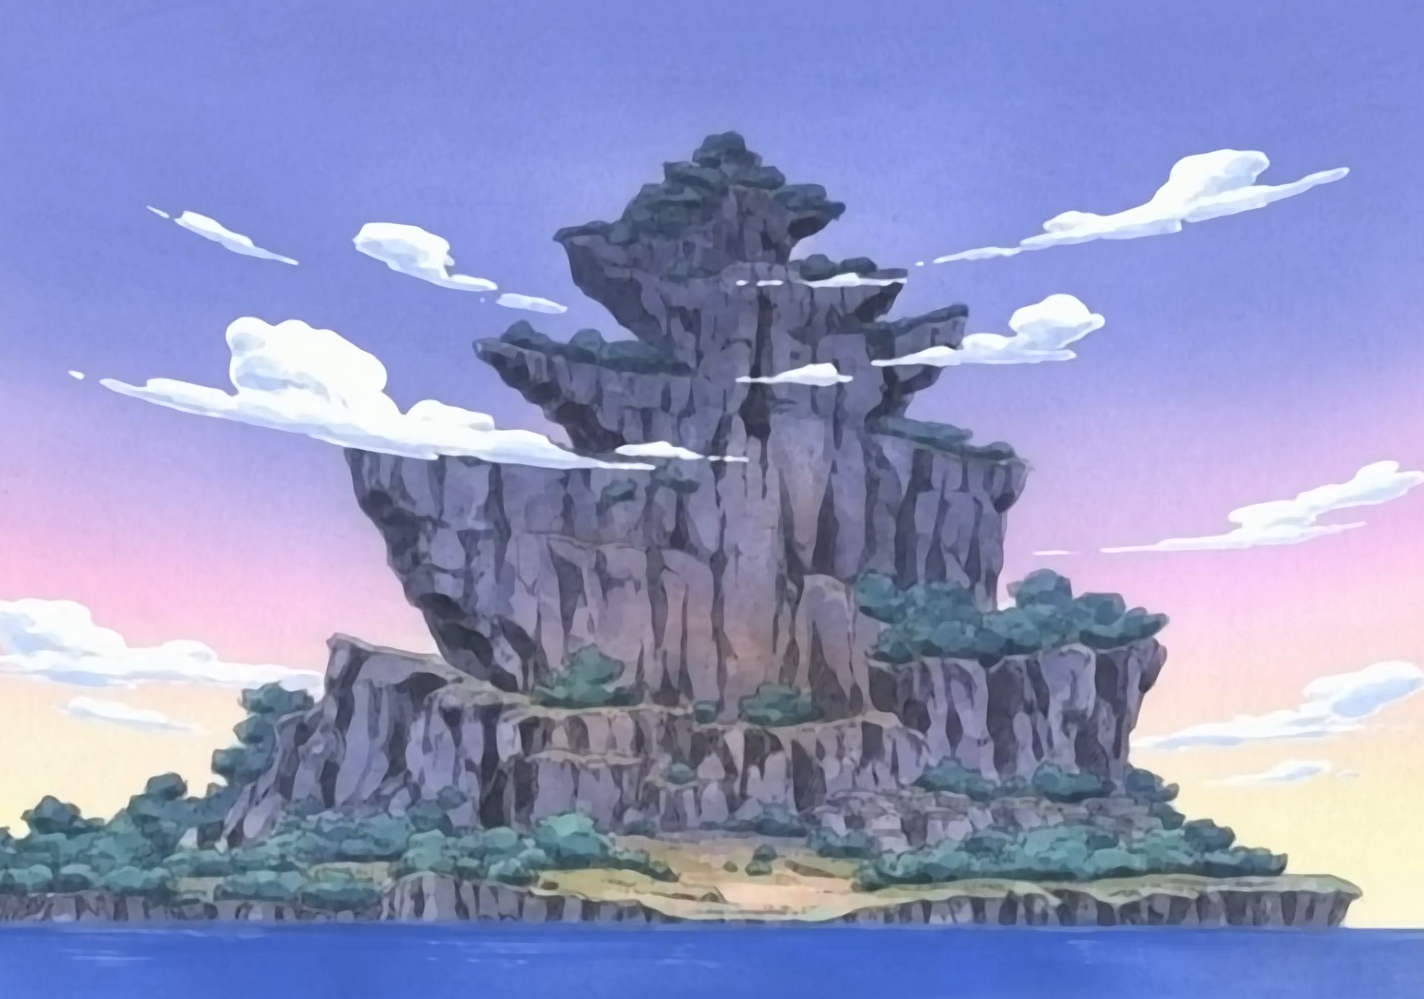 Animeverse island